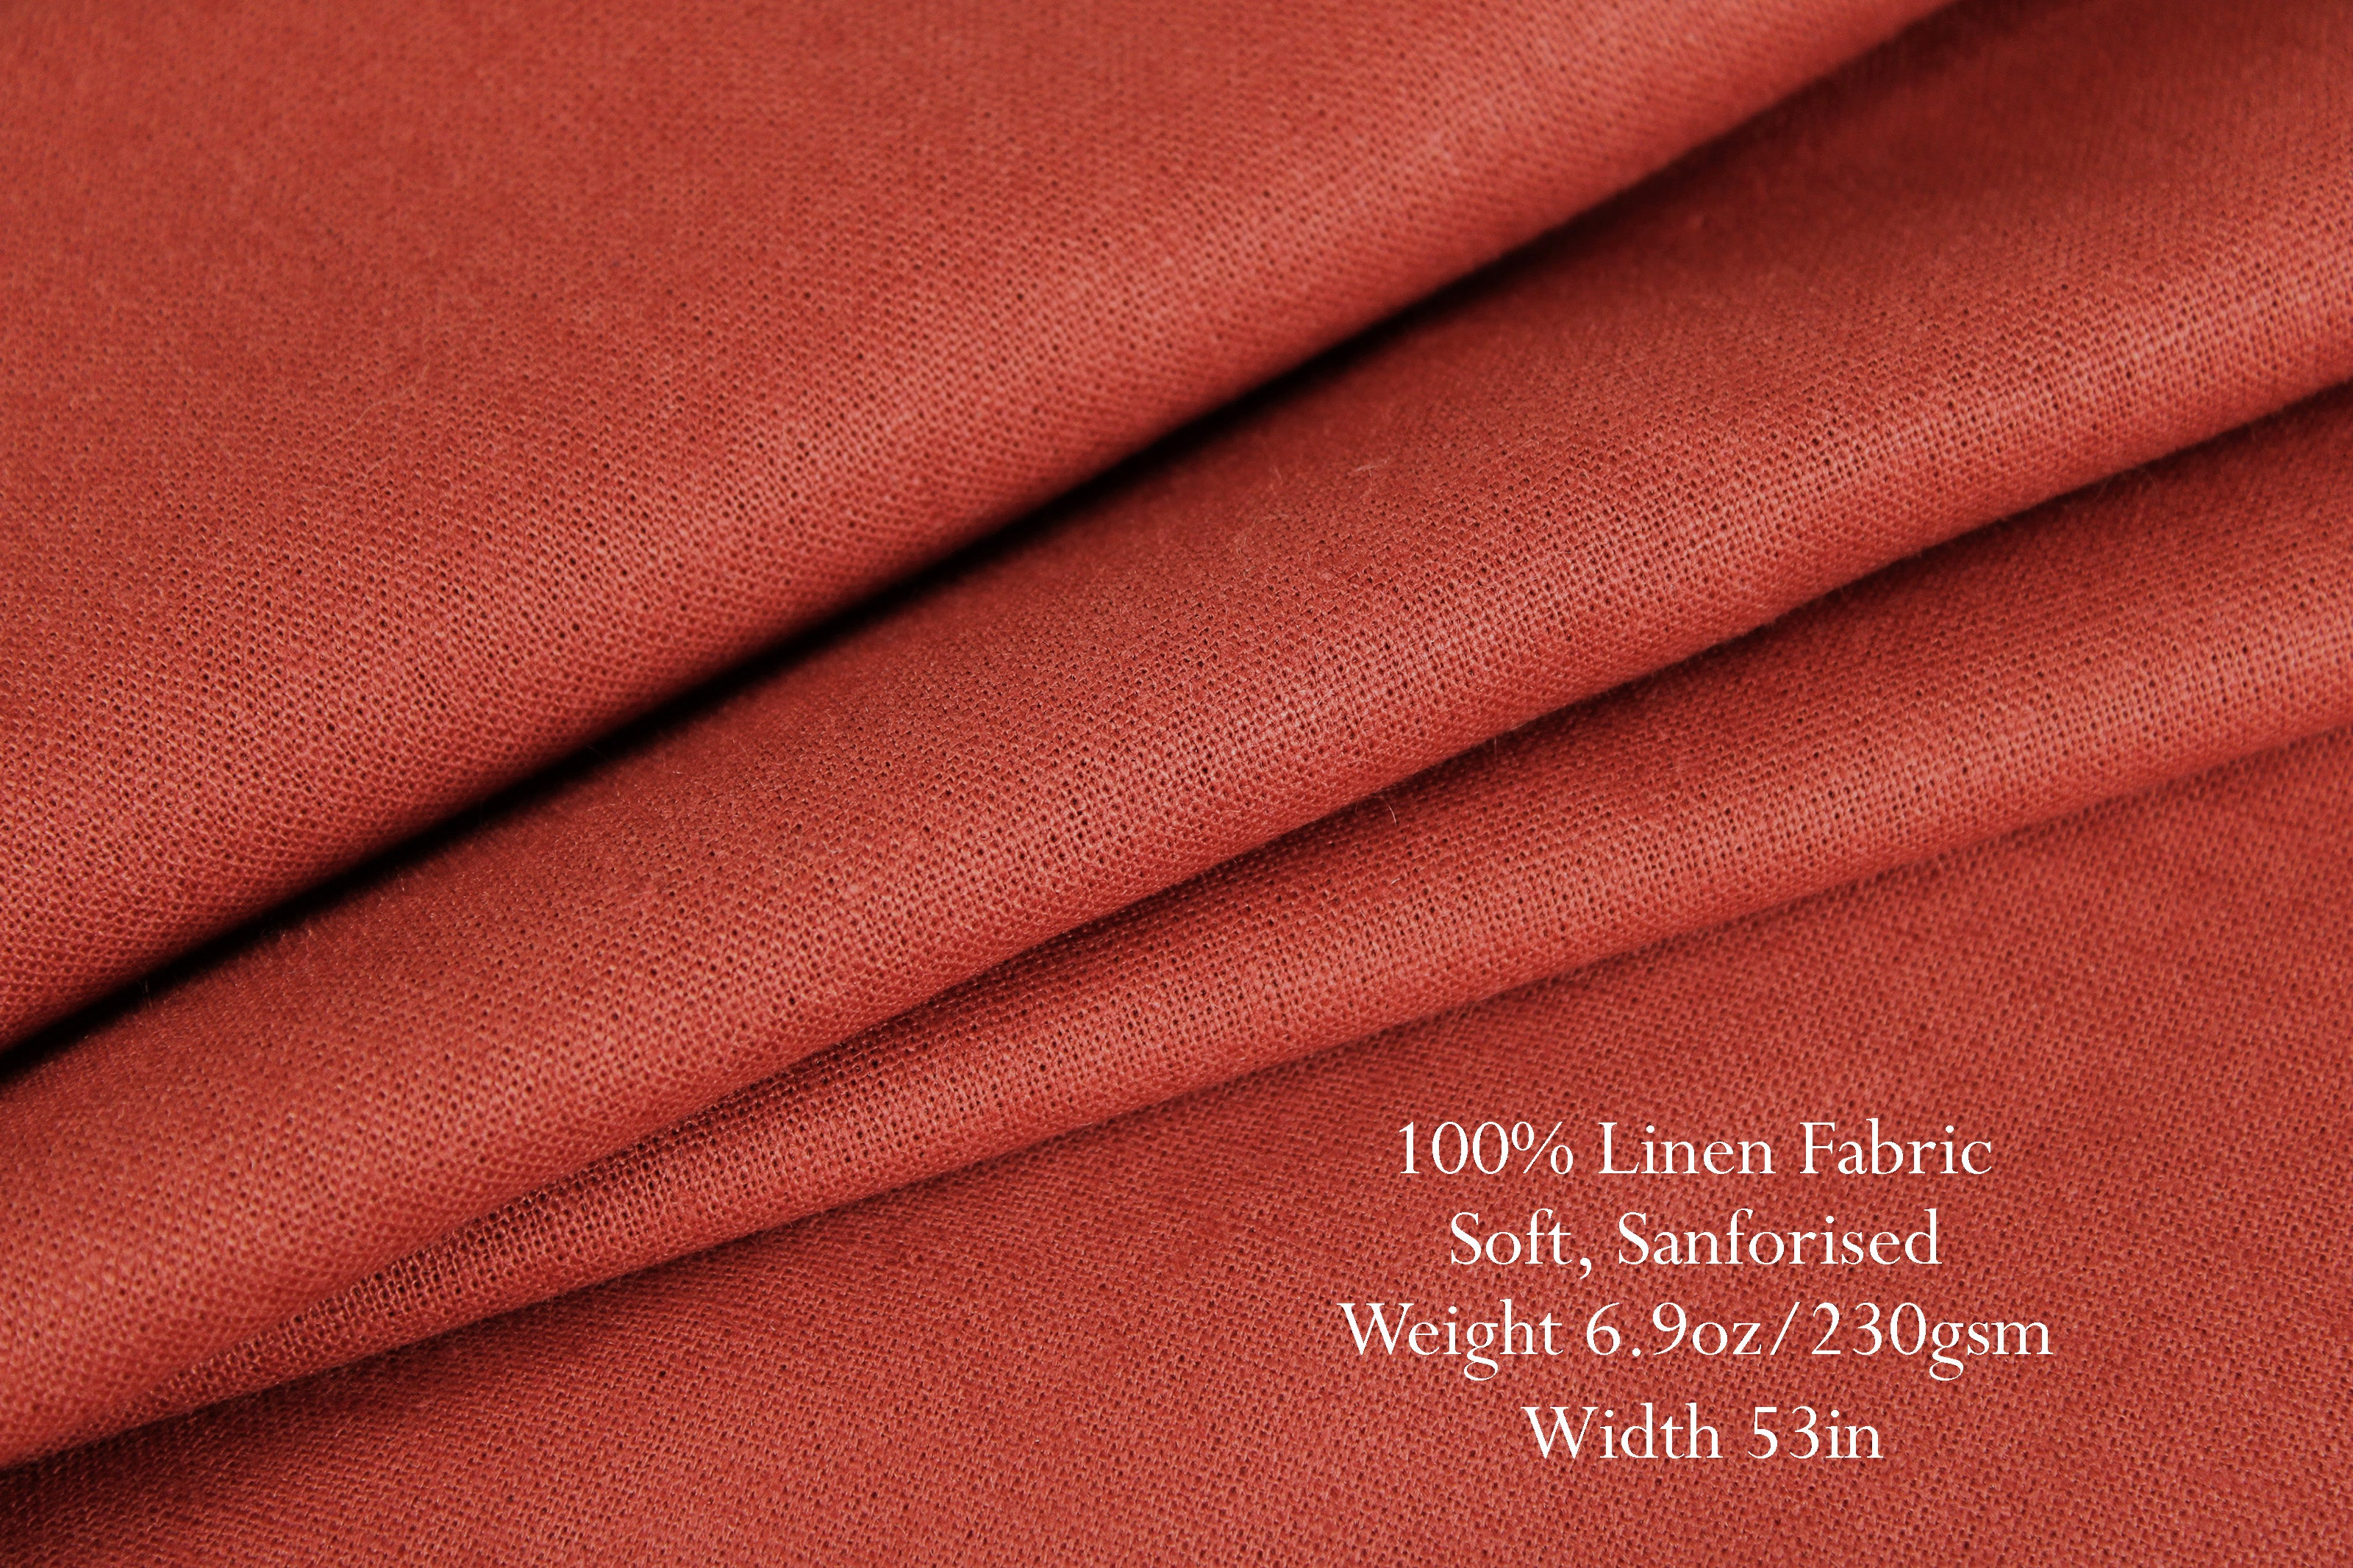 WHOLESALE Linen Fabric USA / Linen Fabric Wholesale Direct / Linen by the Bolt / Marsala linen fabric